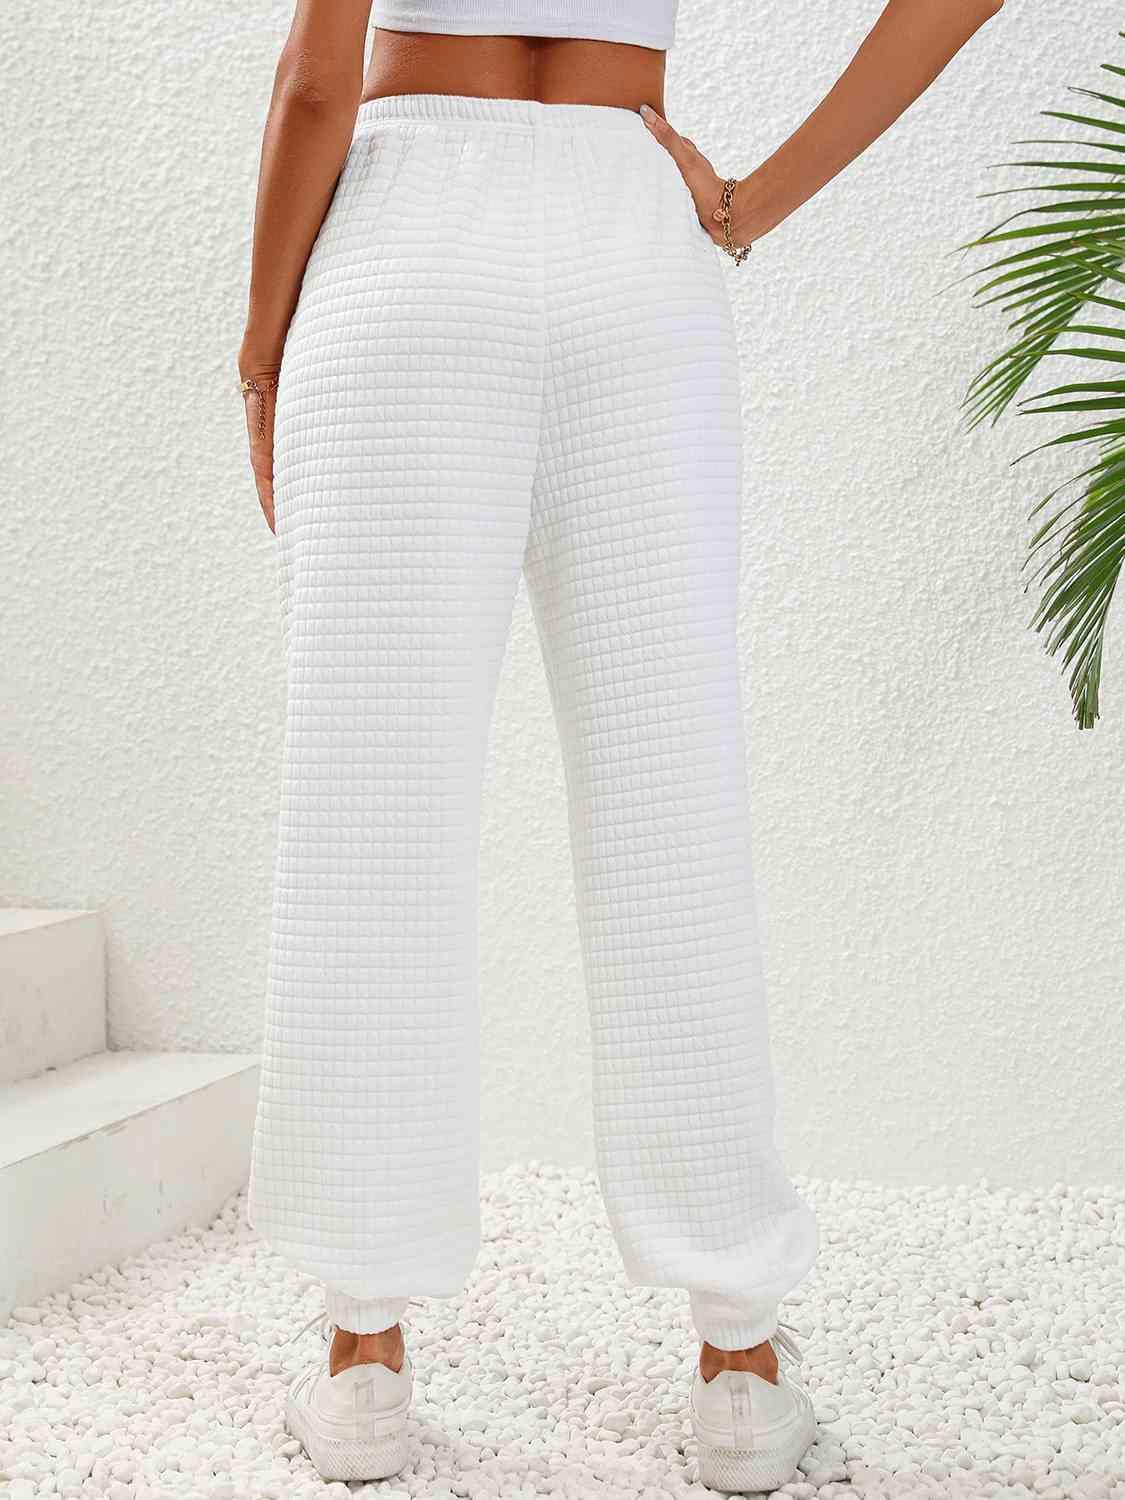 Women's White Pull-On Textured Joggers - MXSTUDIO.COM